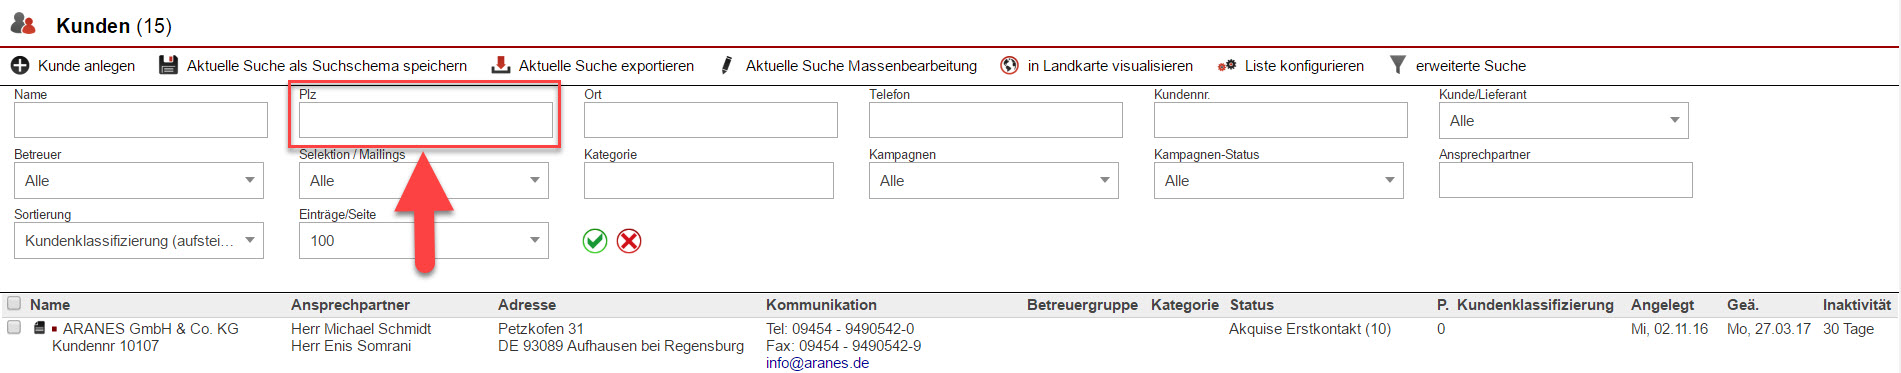 Screenshot Kundensuchmaske mit markierter Postleizahleneingabe